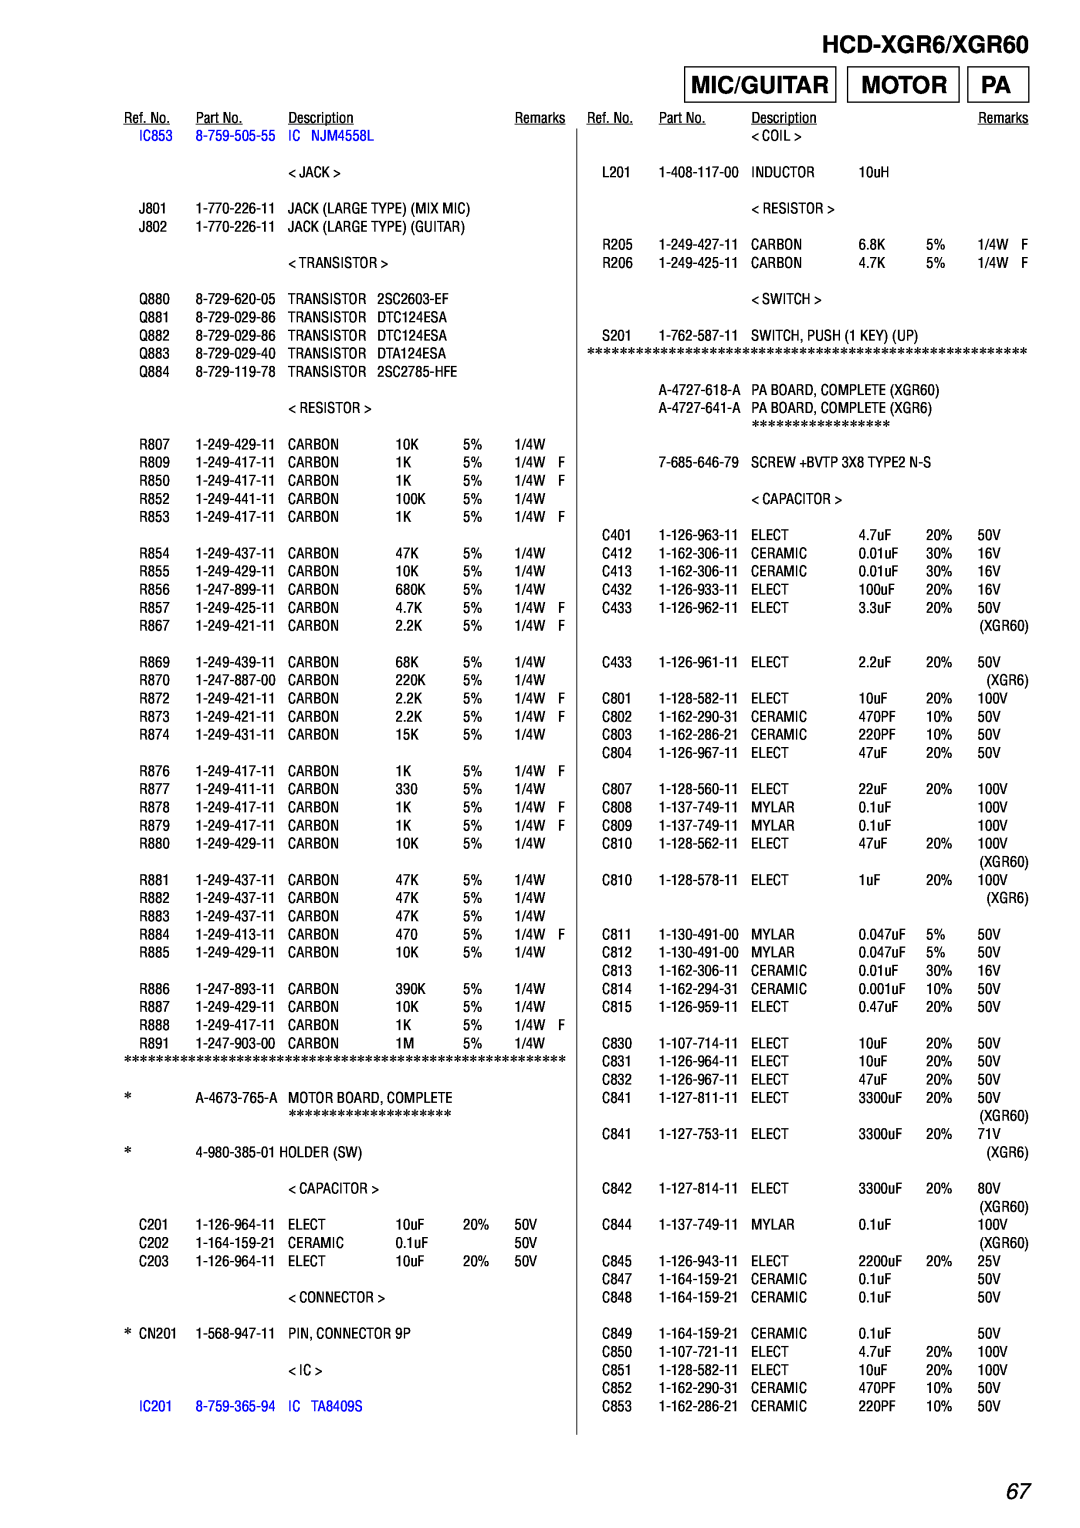 Sony HCD-XGR60 specifications Motor, HCD-XGR6/XGR60, Mic/Guitar, IC853, 8-759-505-55, IC NJM4558L, IC201, IC TA8409S 